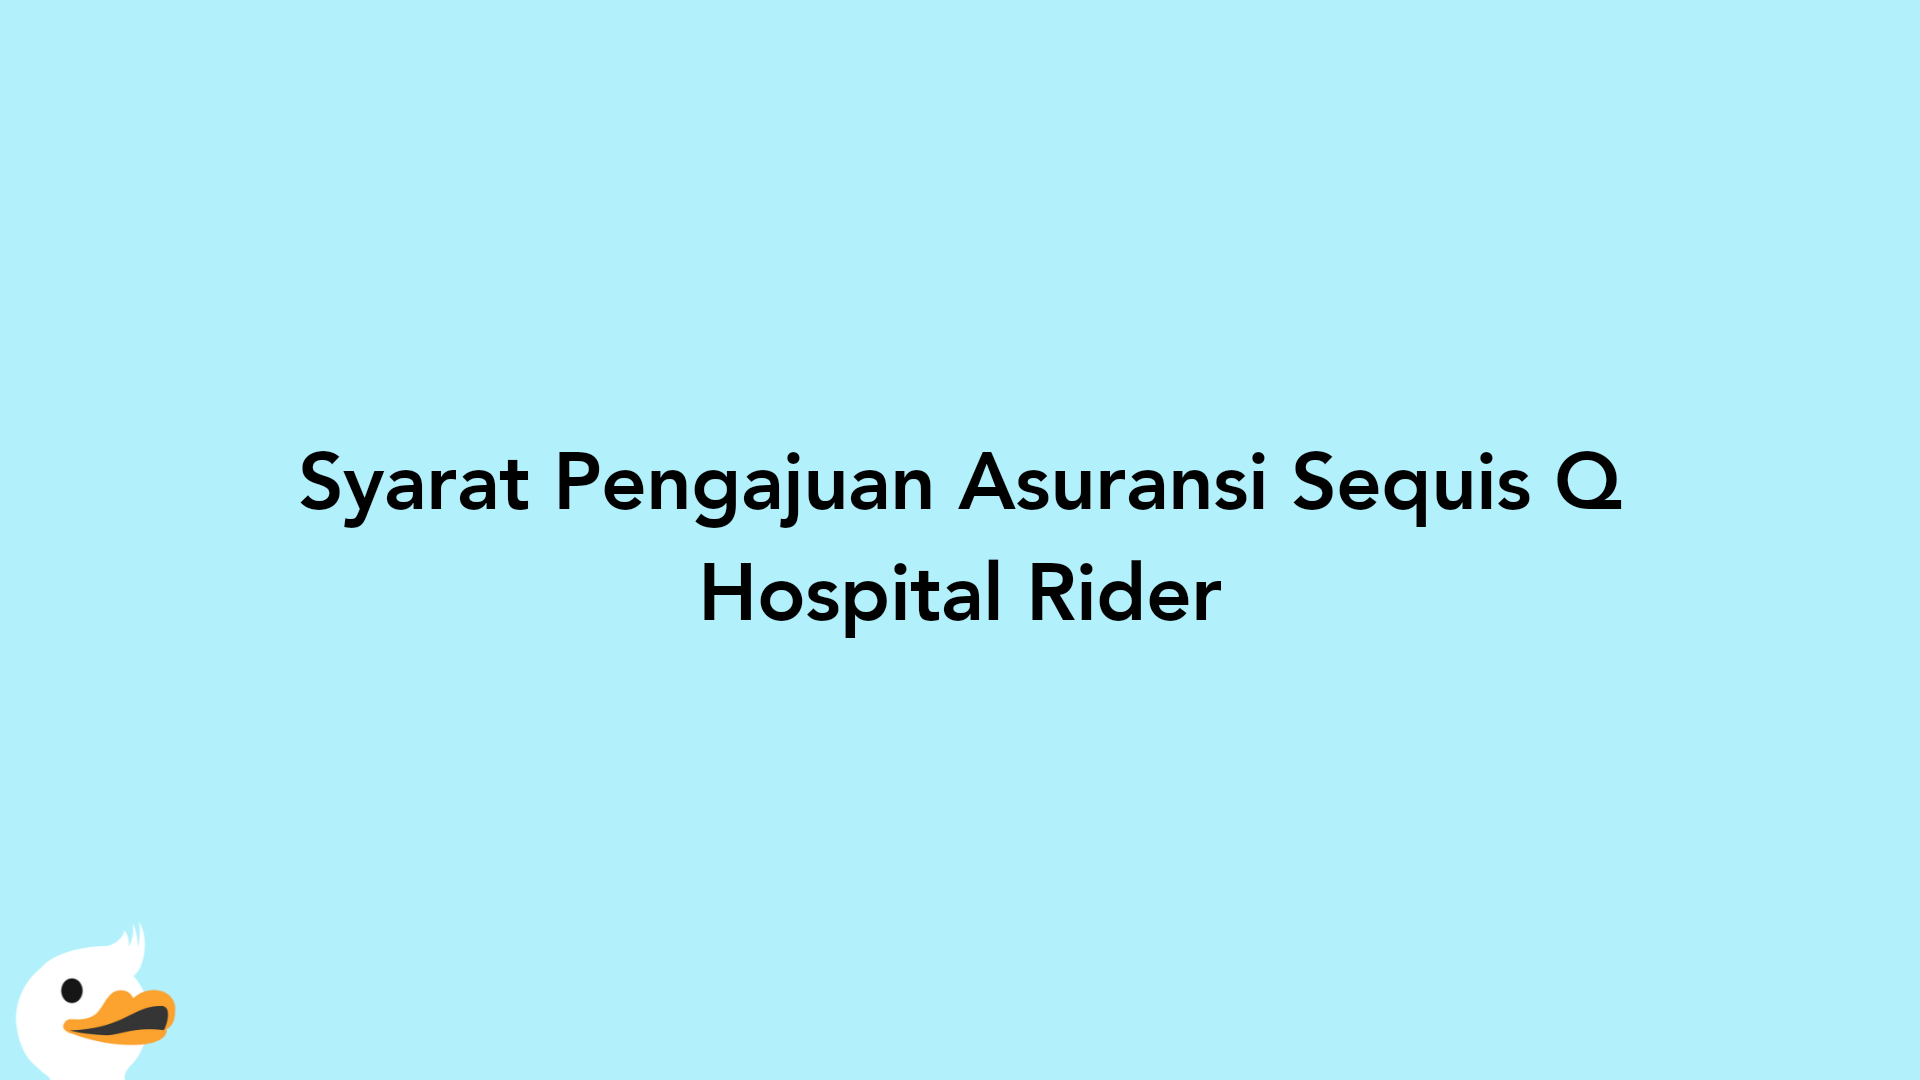 Syarat Pengajuan Asuransi Sequis Q Hospital Rider